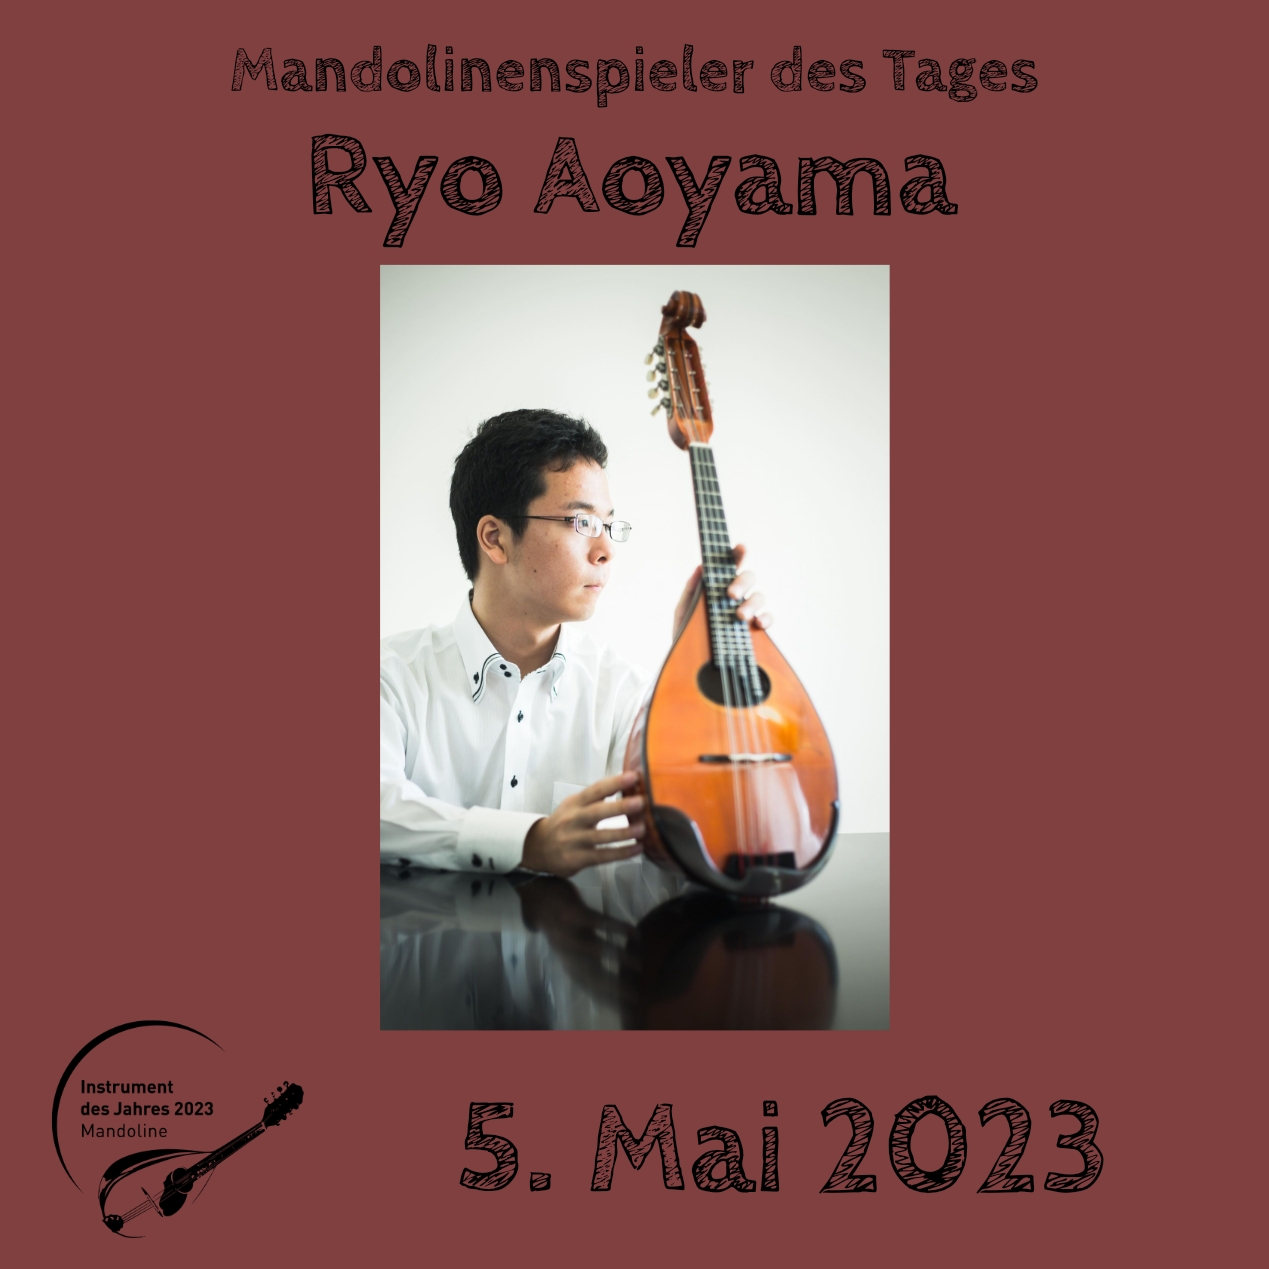 Ryo Aoyama Mandoline Instrument des Jahres 2023 Mandolinenspieler Mandolinenspielerin des Tages